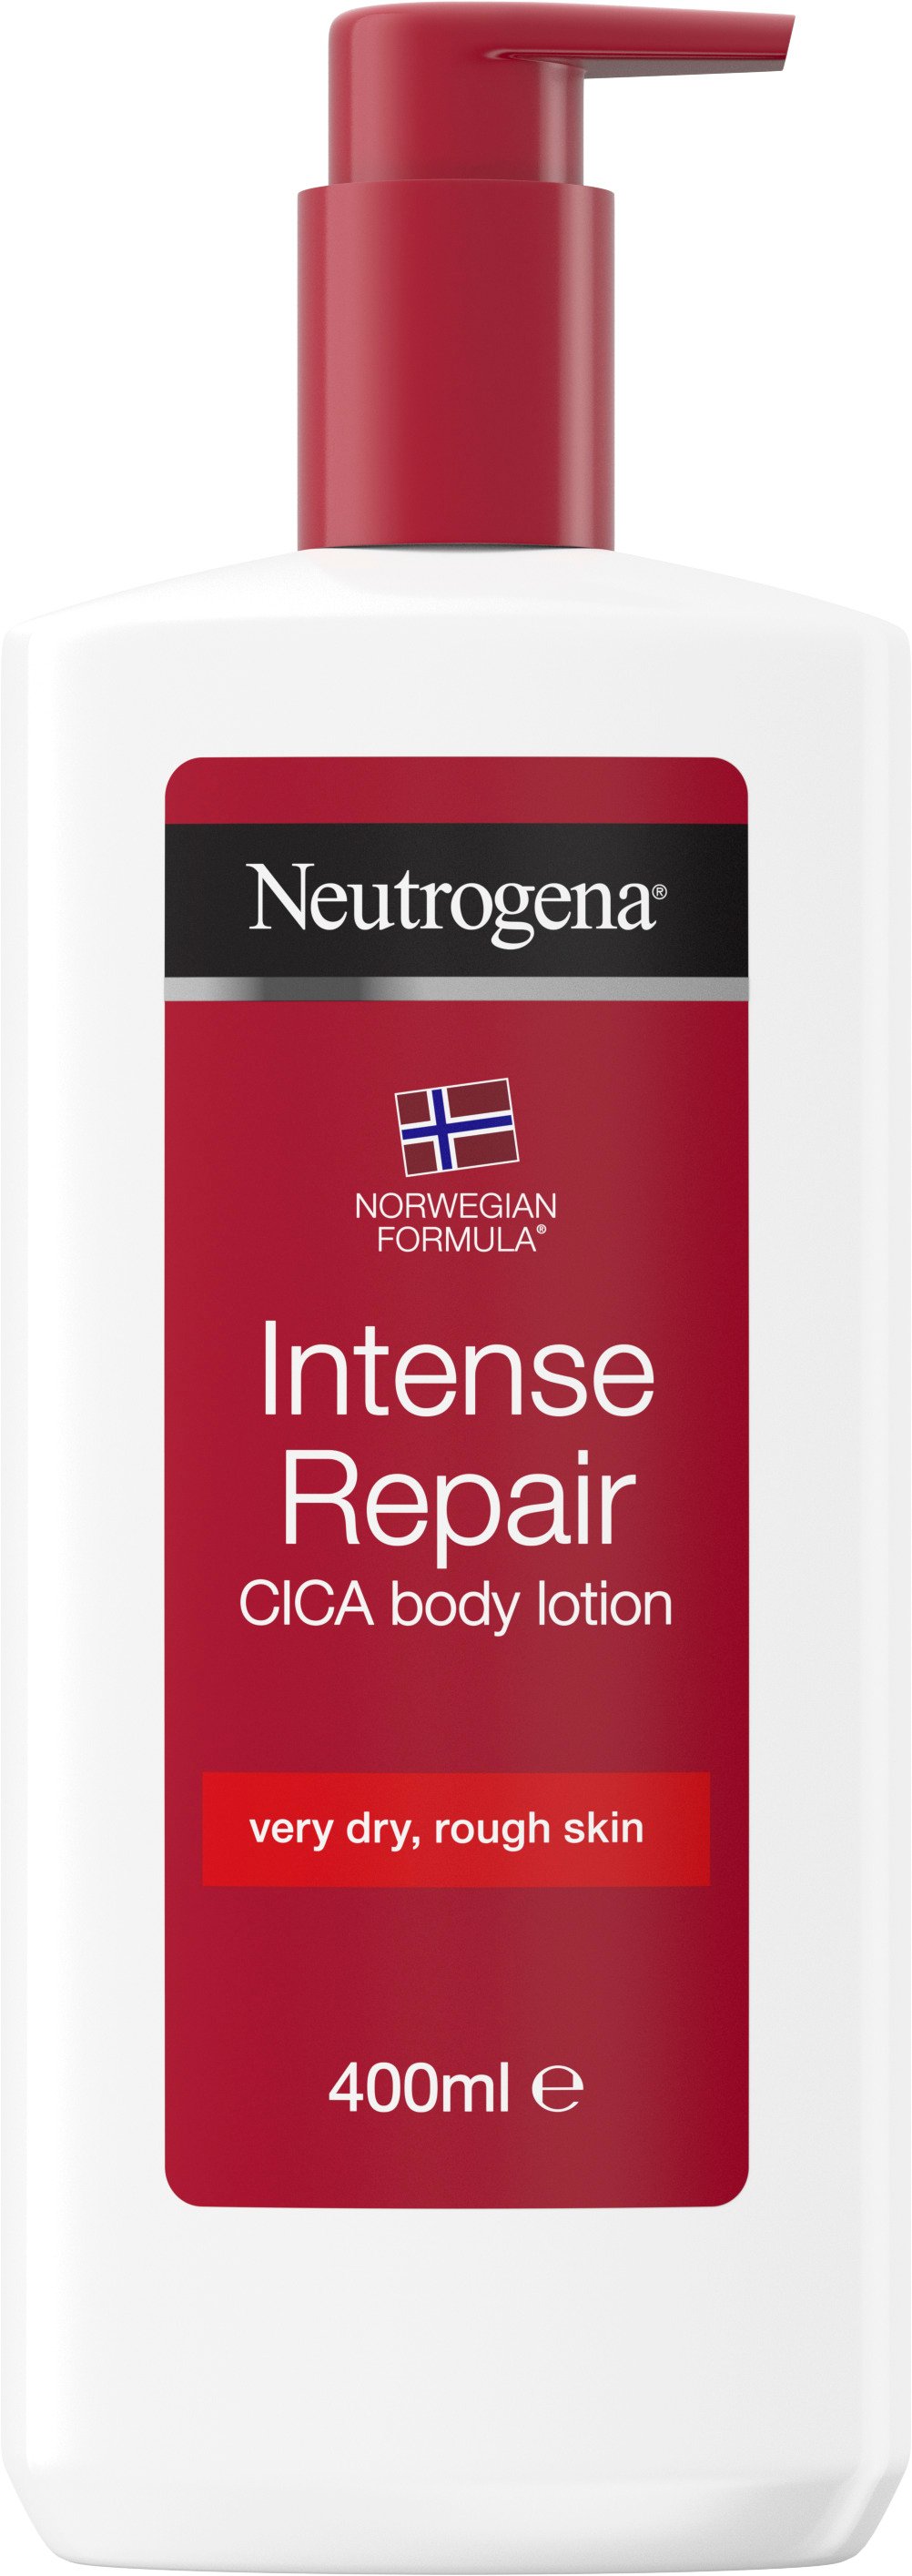 Neutrogena Intense Repair CICA Body Lotion 400 ml